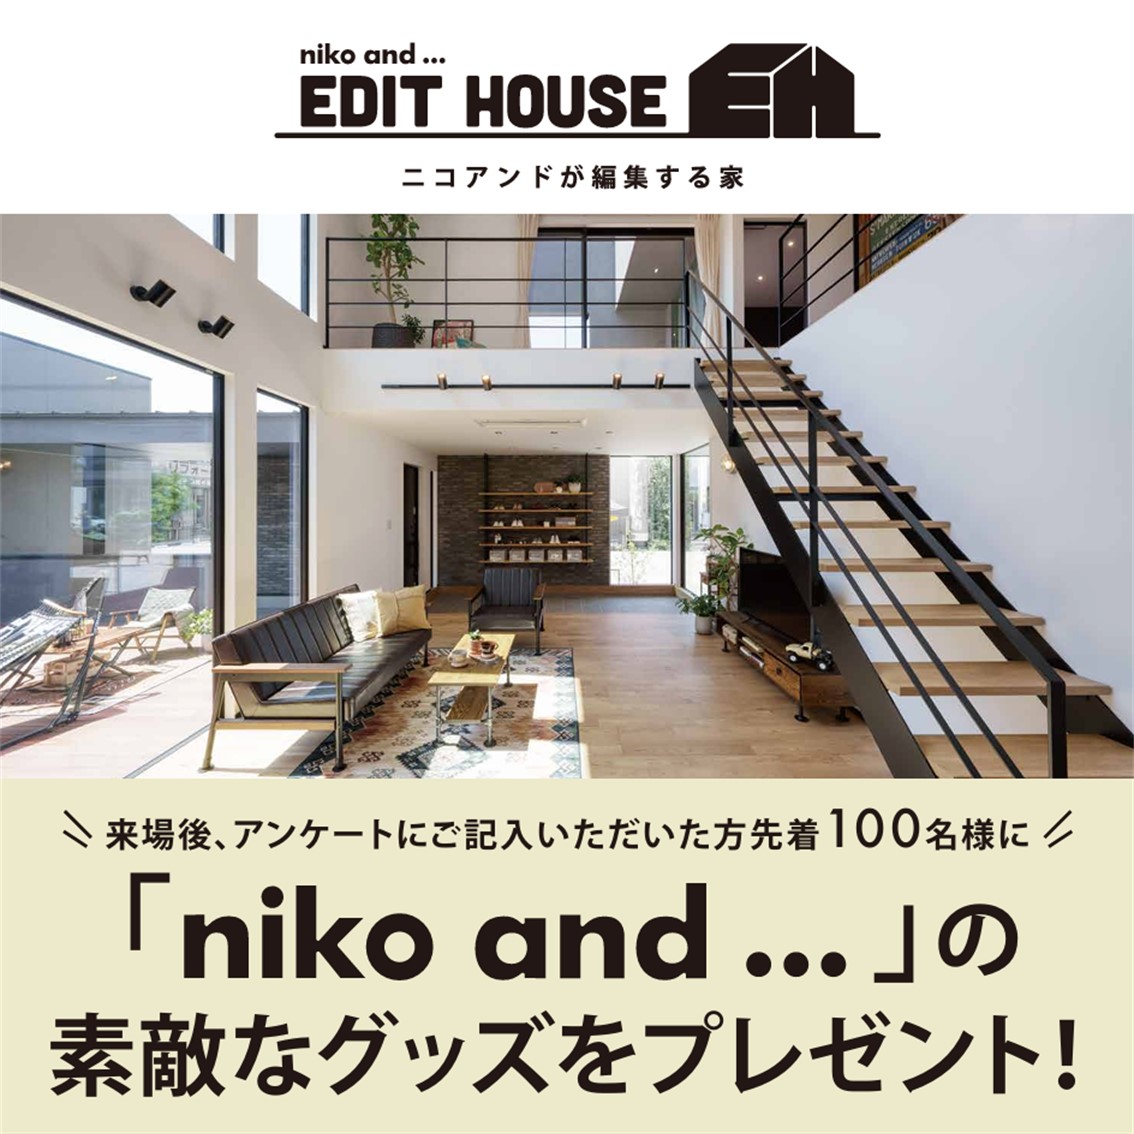 niko and … が編集する家。EDIT HOUSE出店記念！マイホームフェア！